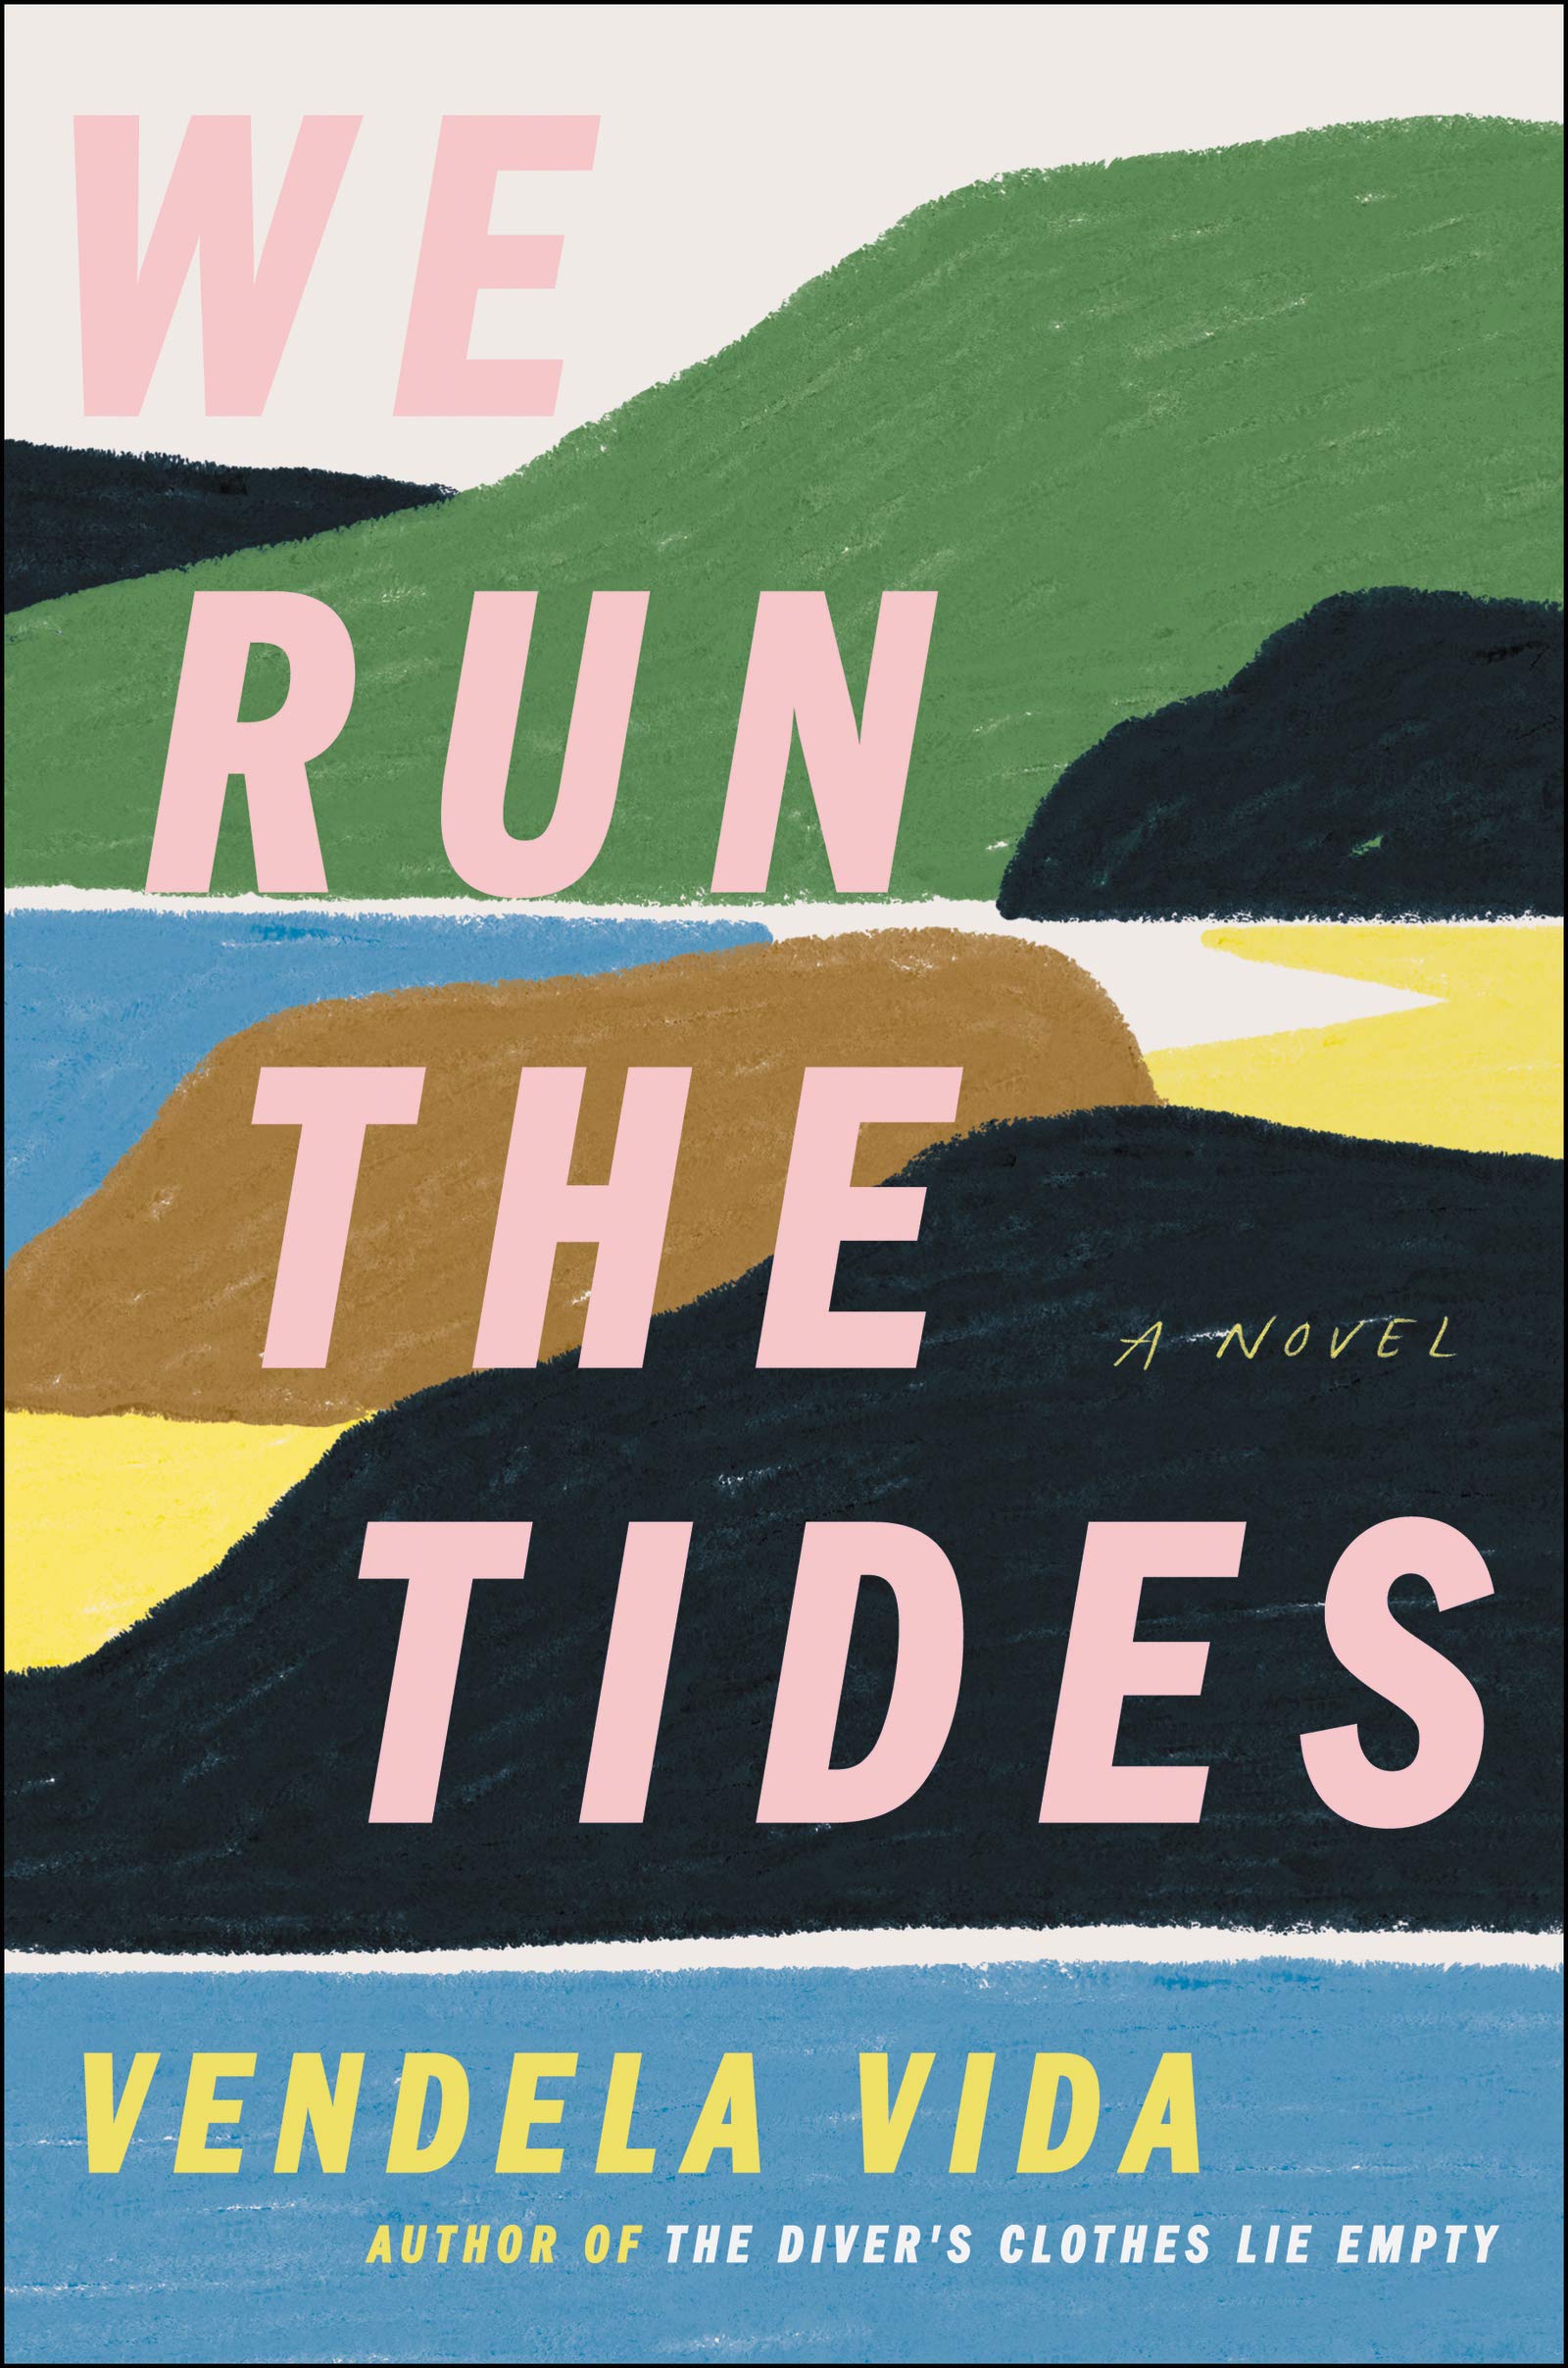 We Run the Tides: A Novel